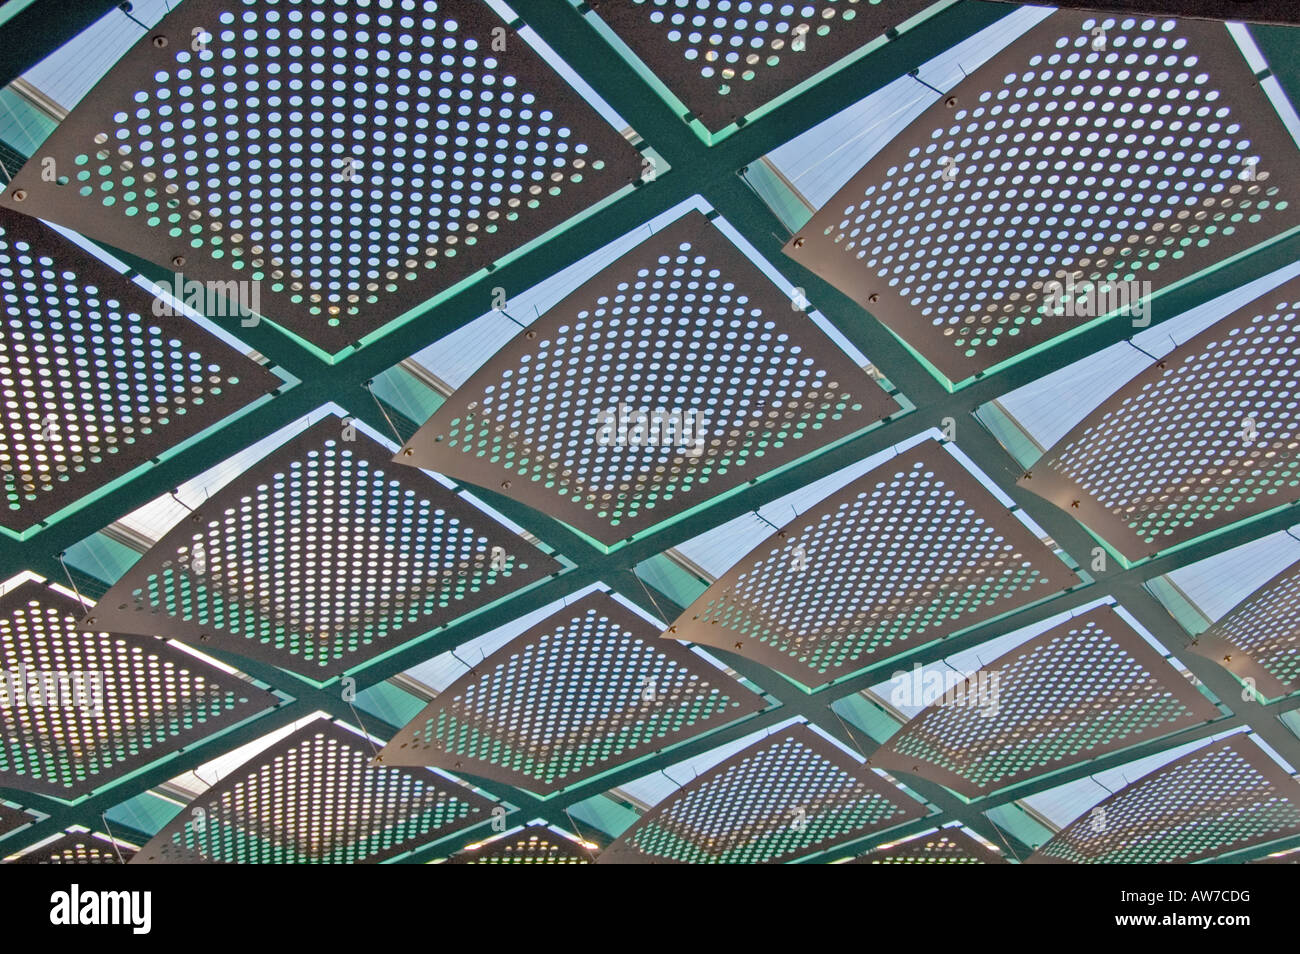 Canopy Finsbury Park Station London England UK Stock Photo